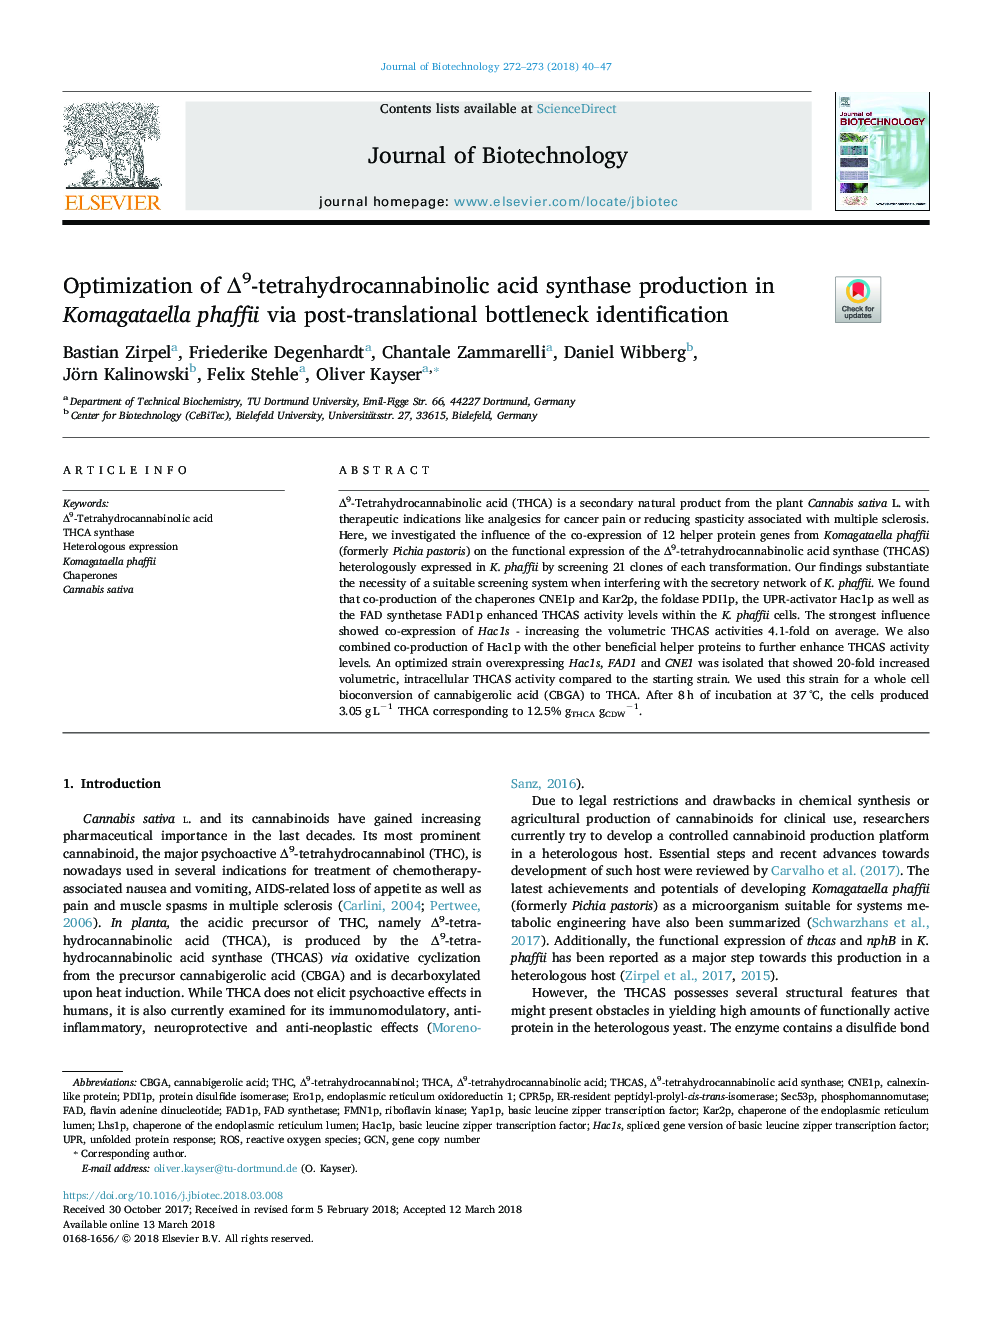 Optimization of Î9-tetrahydrocannabinolic acid synthase production in Komagataella phaffii via post-translational bottleneck identification